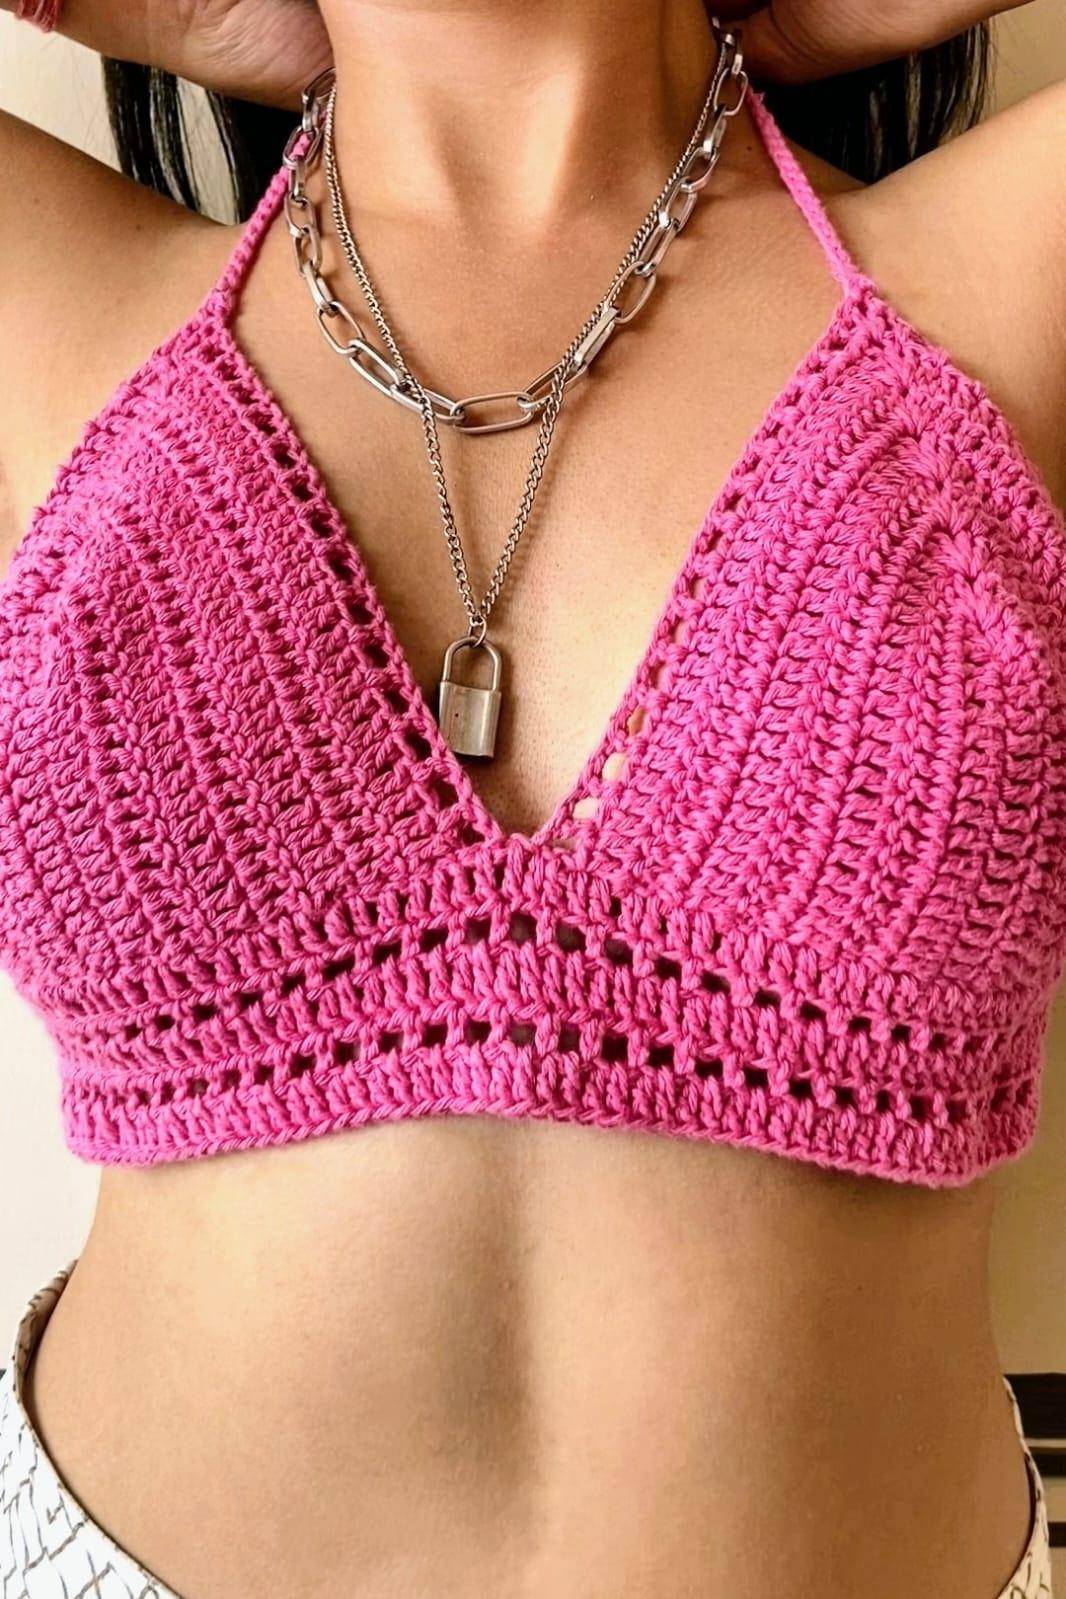 Buy Crochet Pink Bralette In the Best Price - Hand Knitted Crochet Top & Bralette